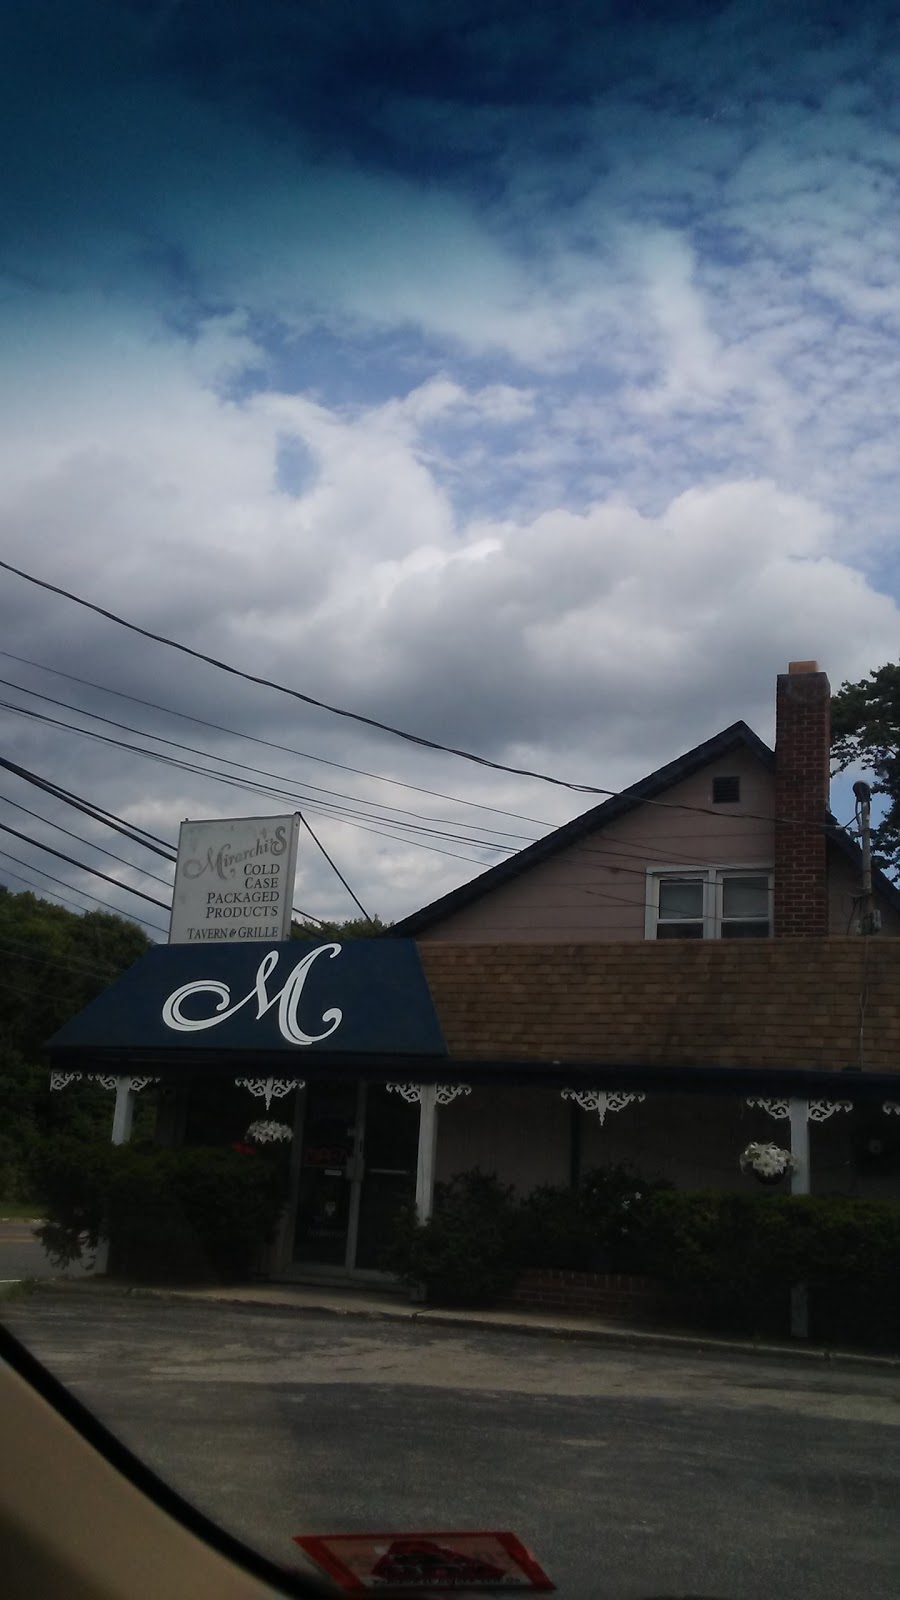 Mirarchis Williamstown Inn | 2557 S Black Horse Pike, Williamstown, NJ 08094 | Phone: (856) 728-1842